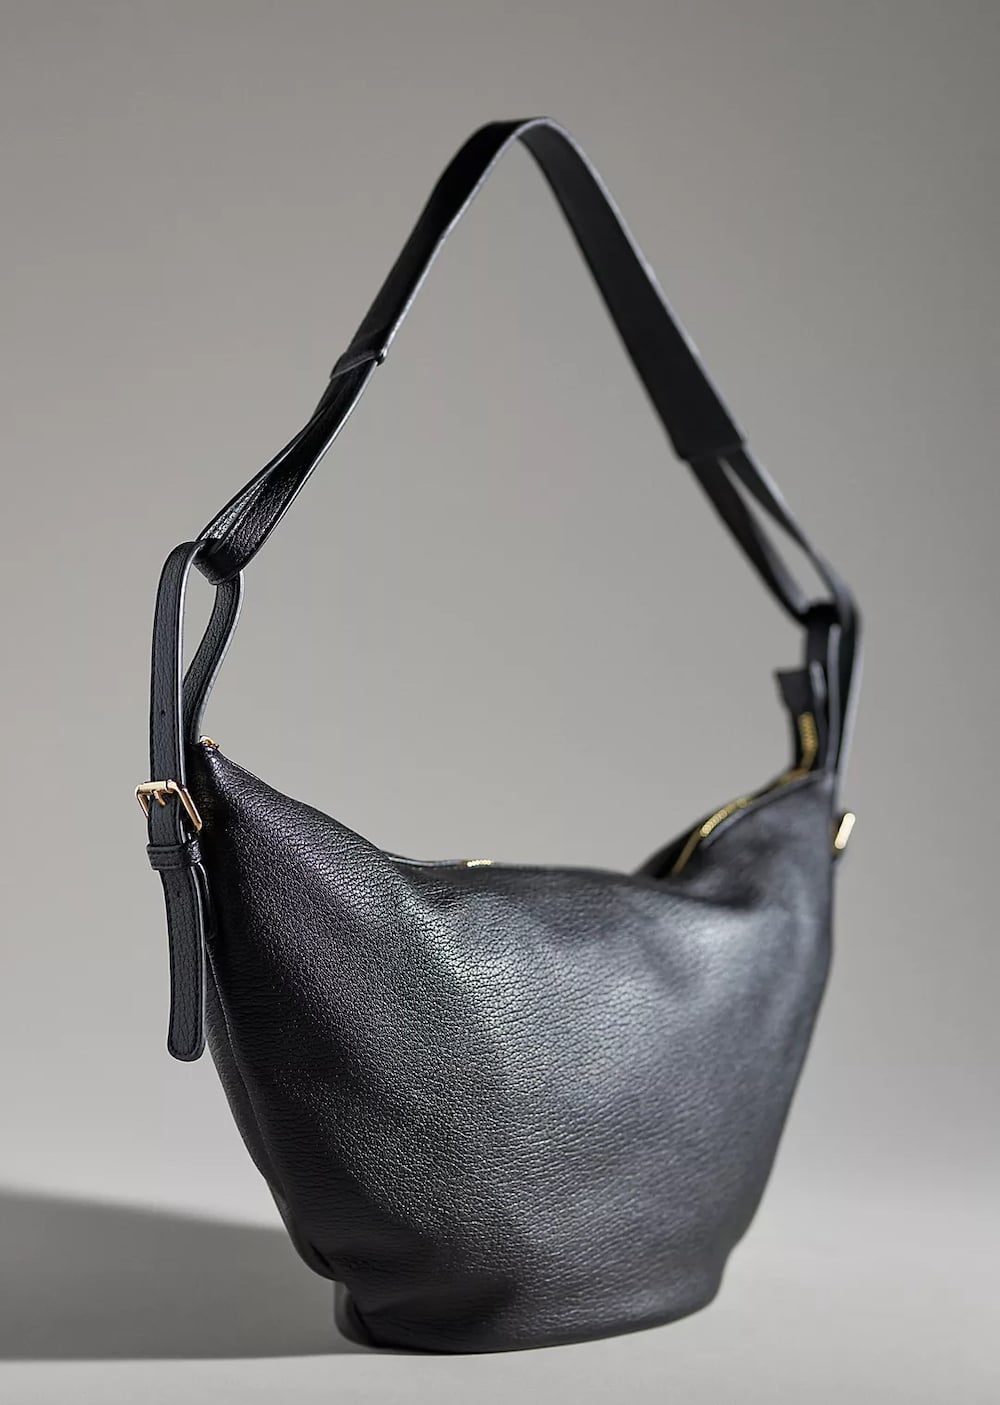 image of a sling bag that looks like the Khaite Alessia bag